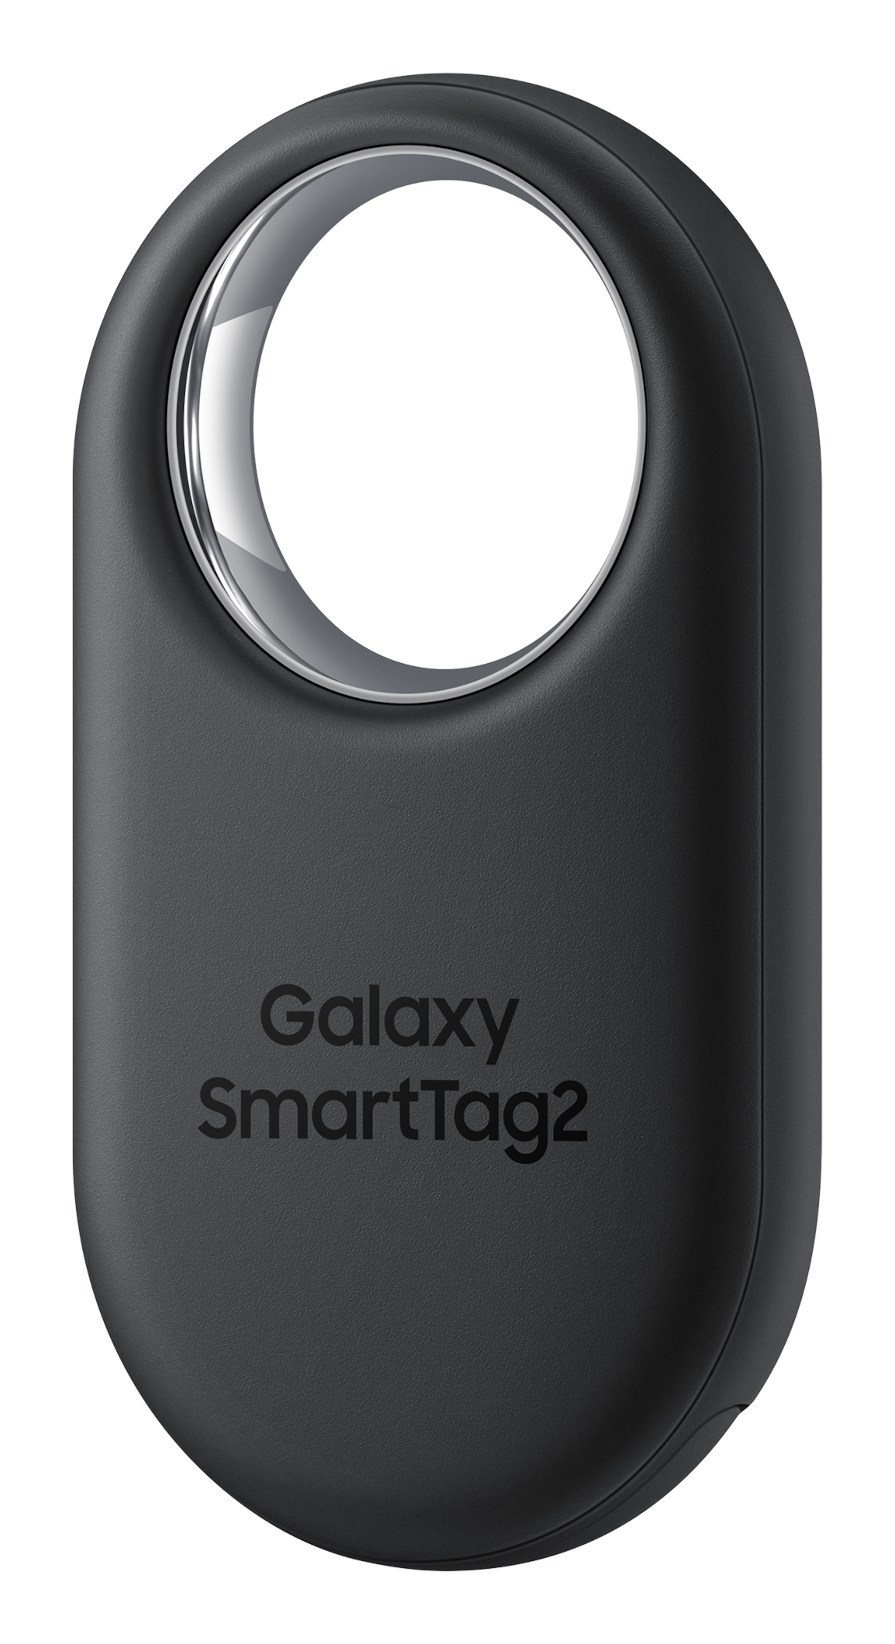 Samsung Galaxy SmartTag2 Black front right